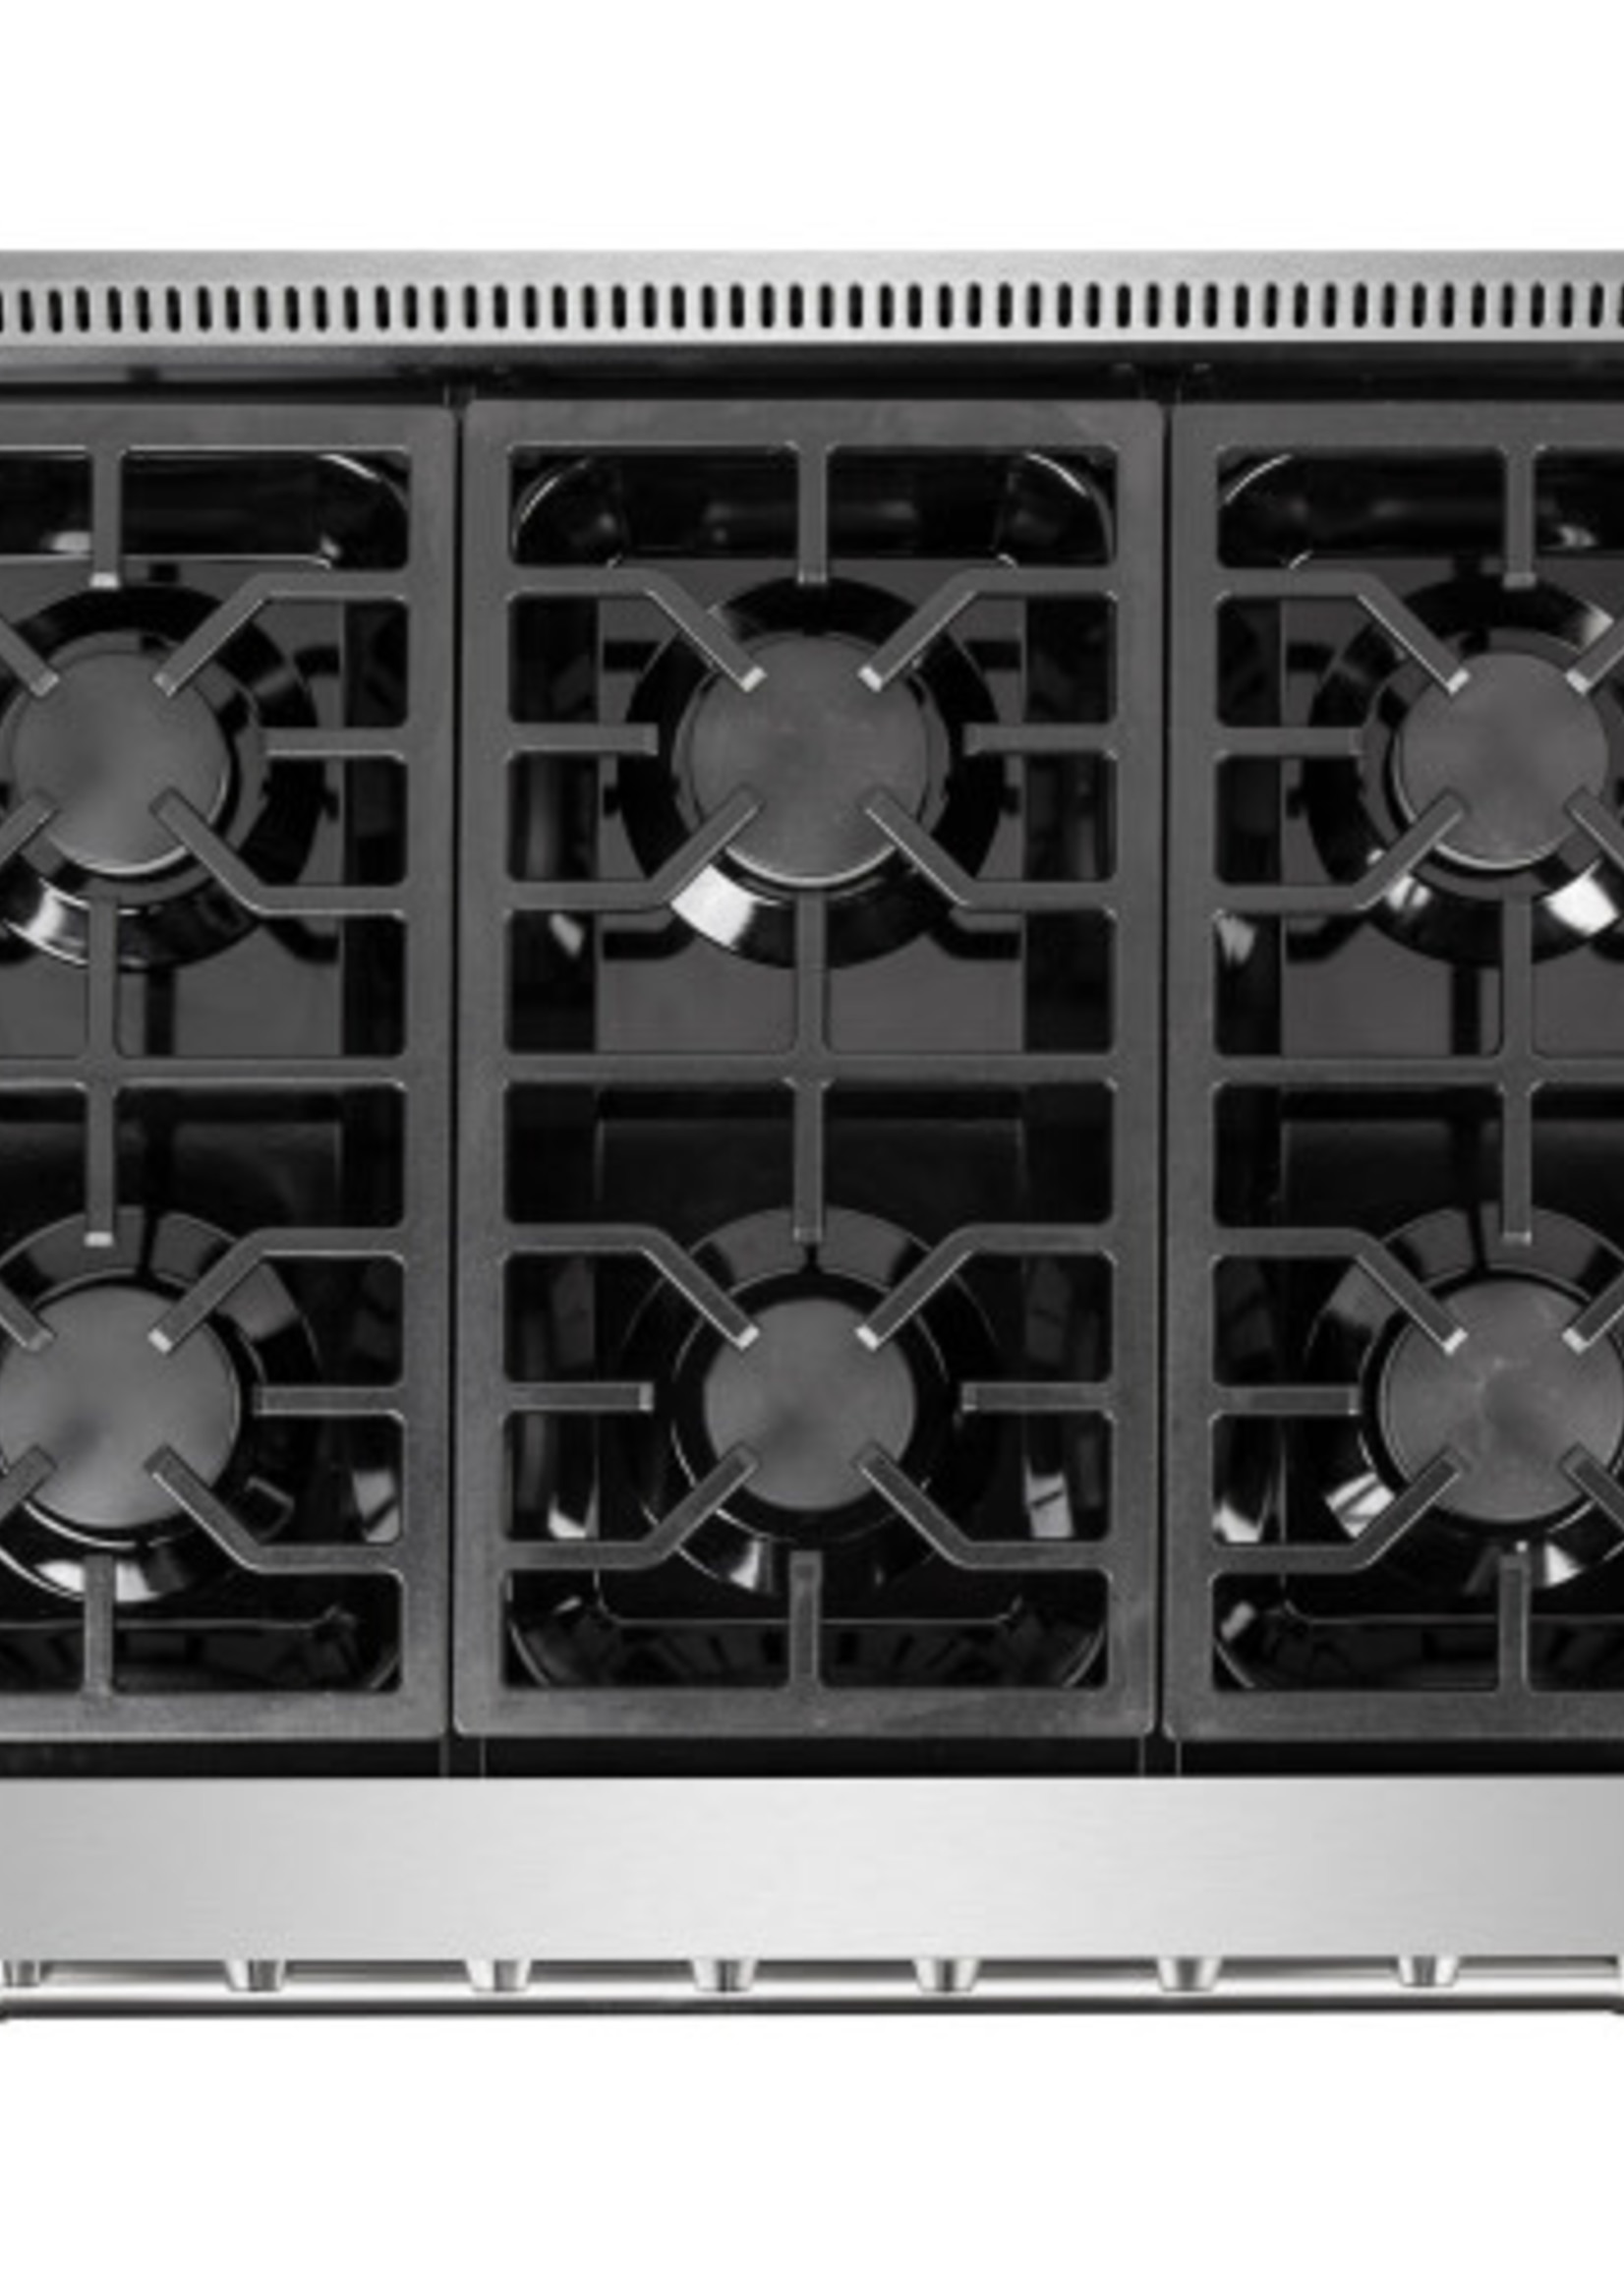 NXR **NXR  AKD3605  36" / 5.5 CF Culinary Series Dual Fuel Range, 6 Burners, Manual Clean Oven - Stainless